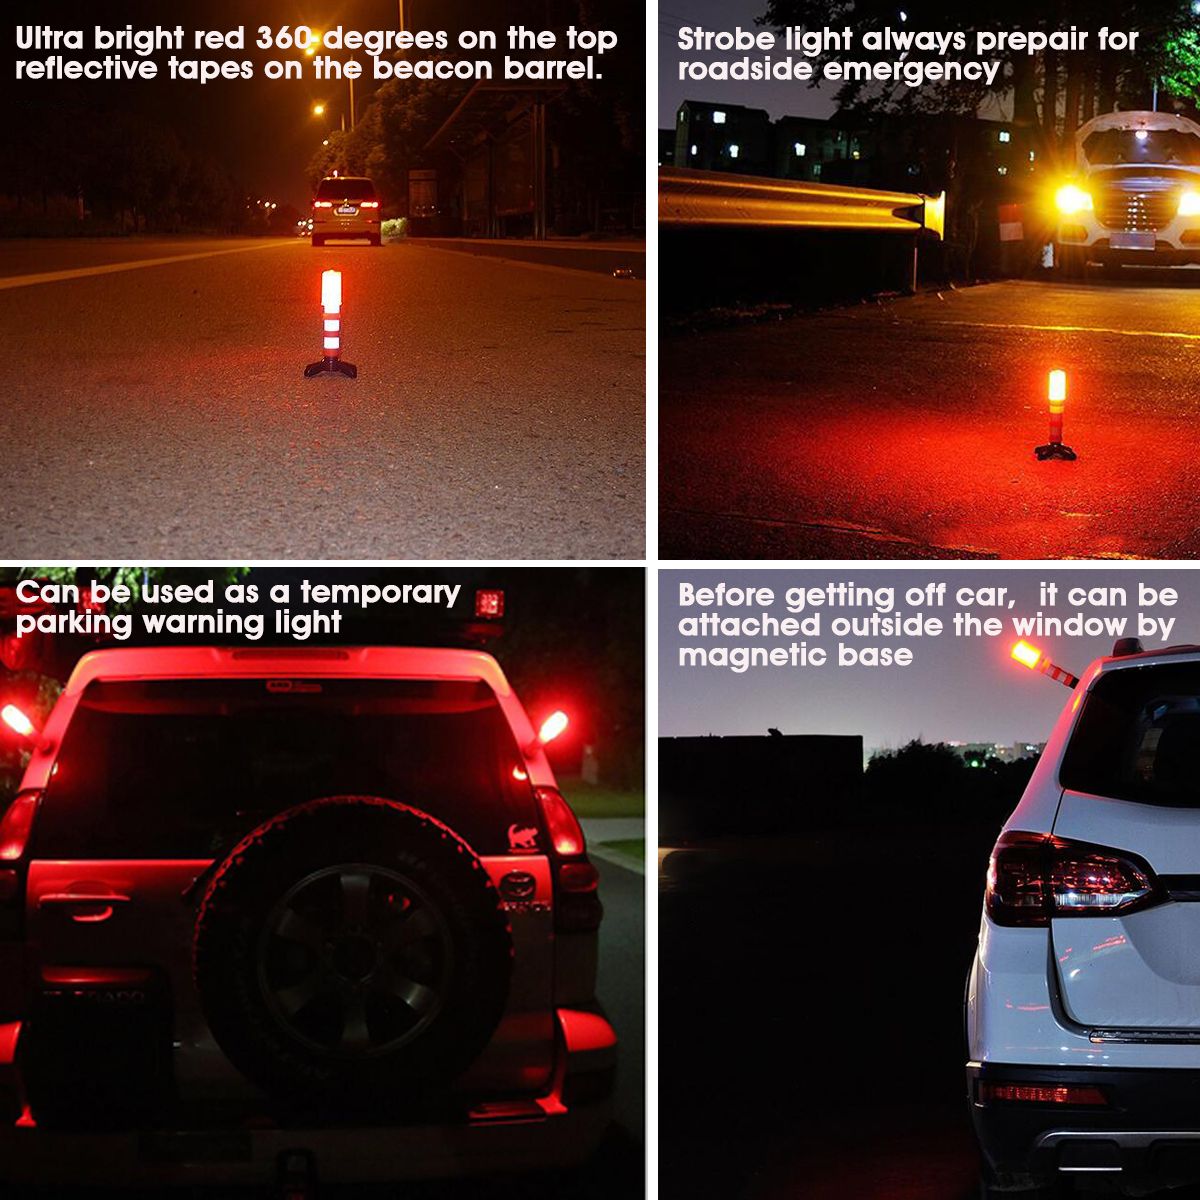 2PCS-LED-Car-Emergency-Warning-Light-Roadside-Flash-Flares-Beacon-Safety-Strobe-Lamp-with-Magnet-Bas-1644587